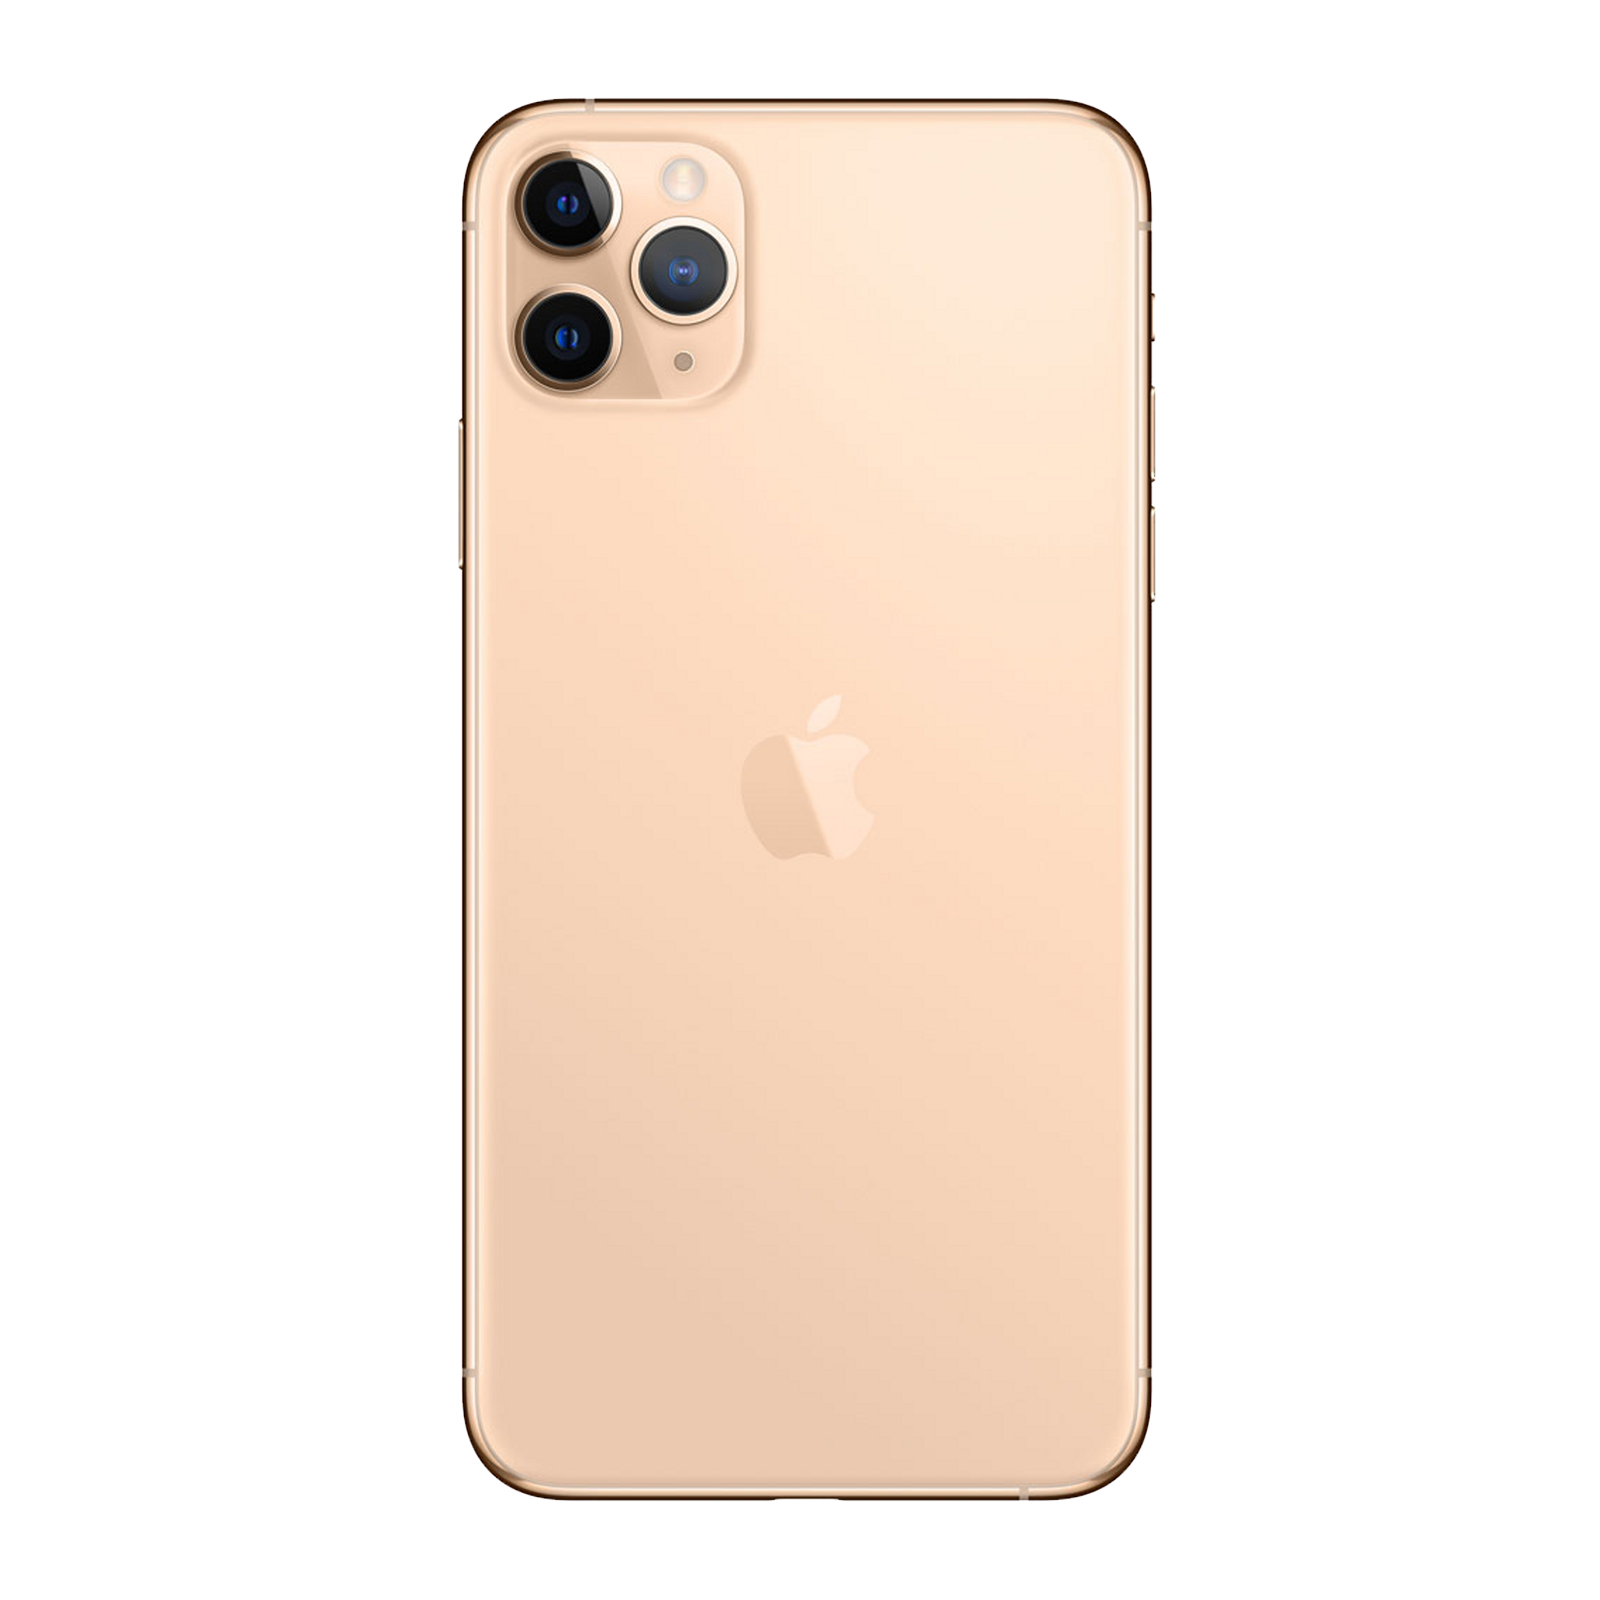 Apple iPhone 11 Pro 512GB Gold Fair - T-Mobile